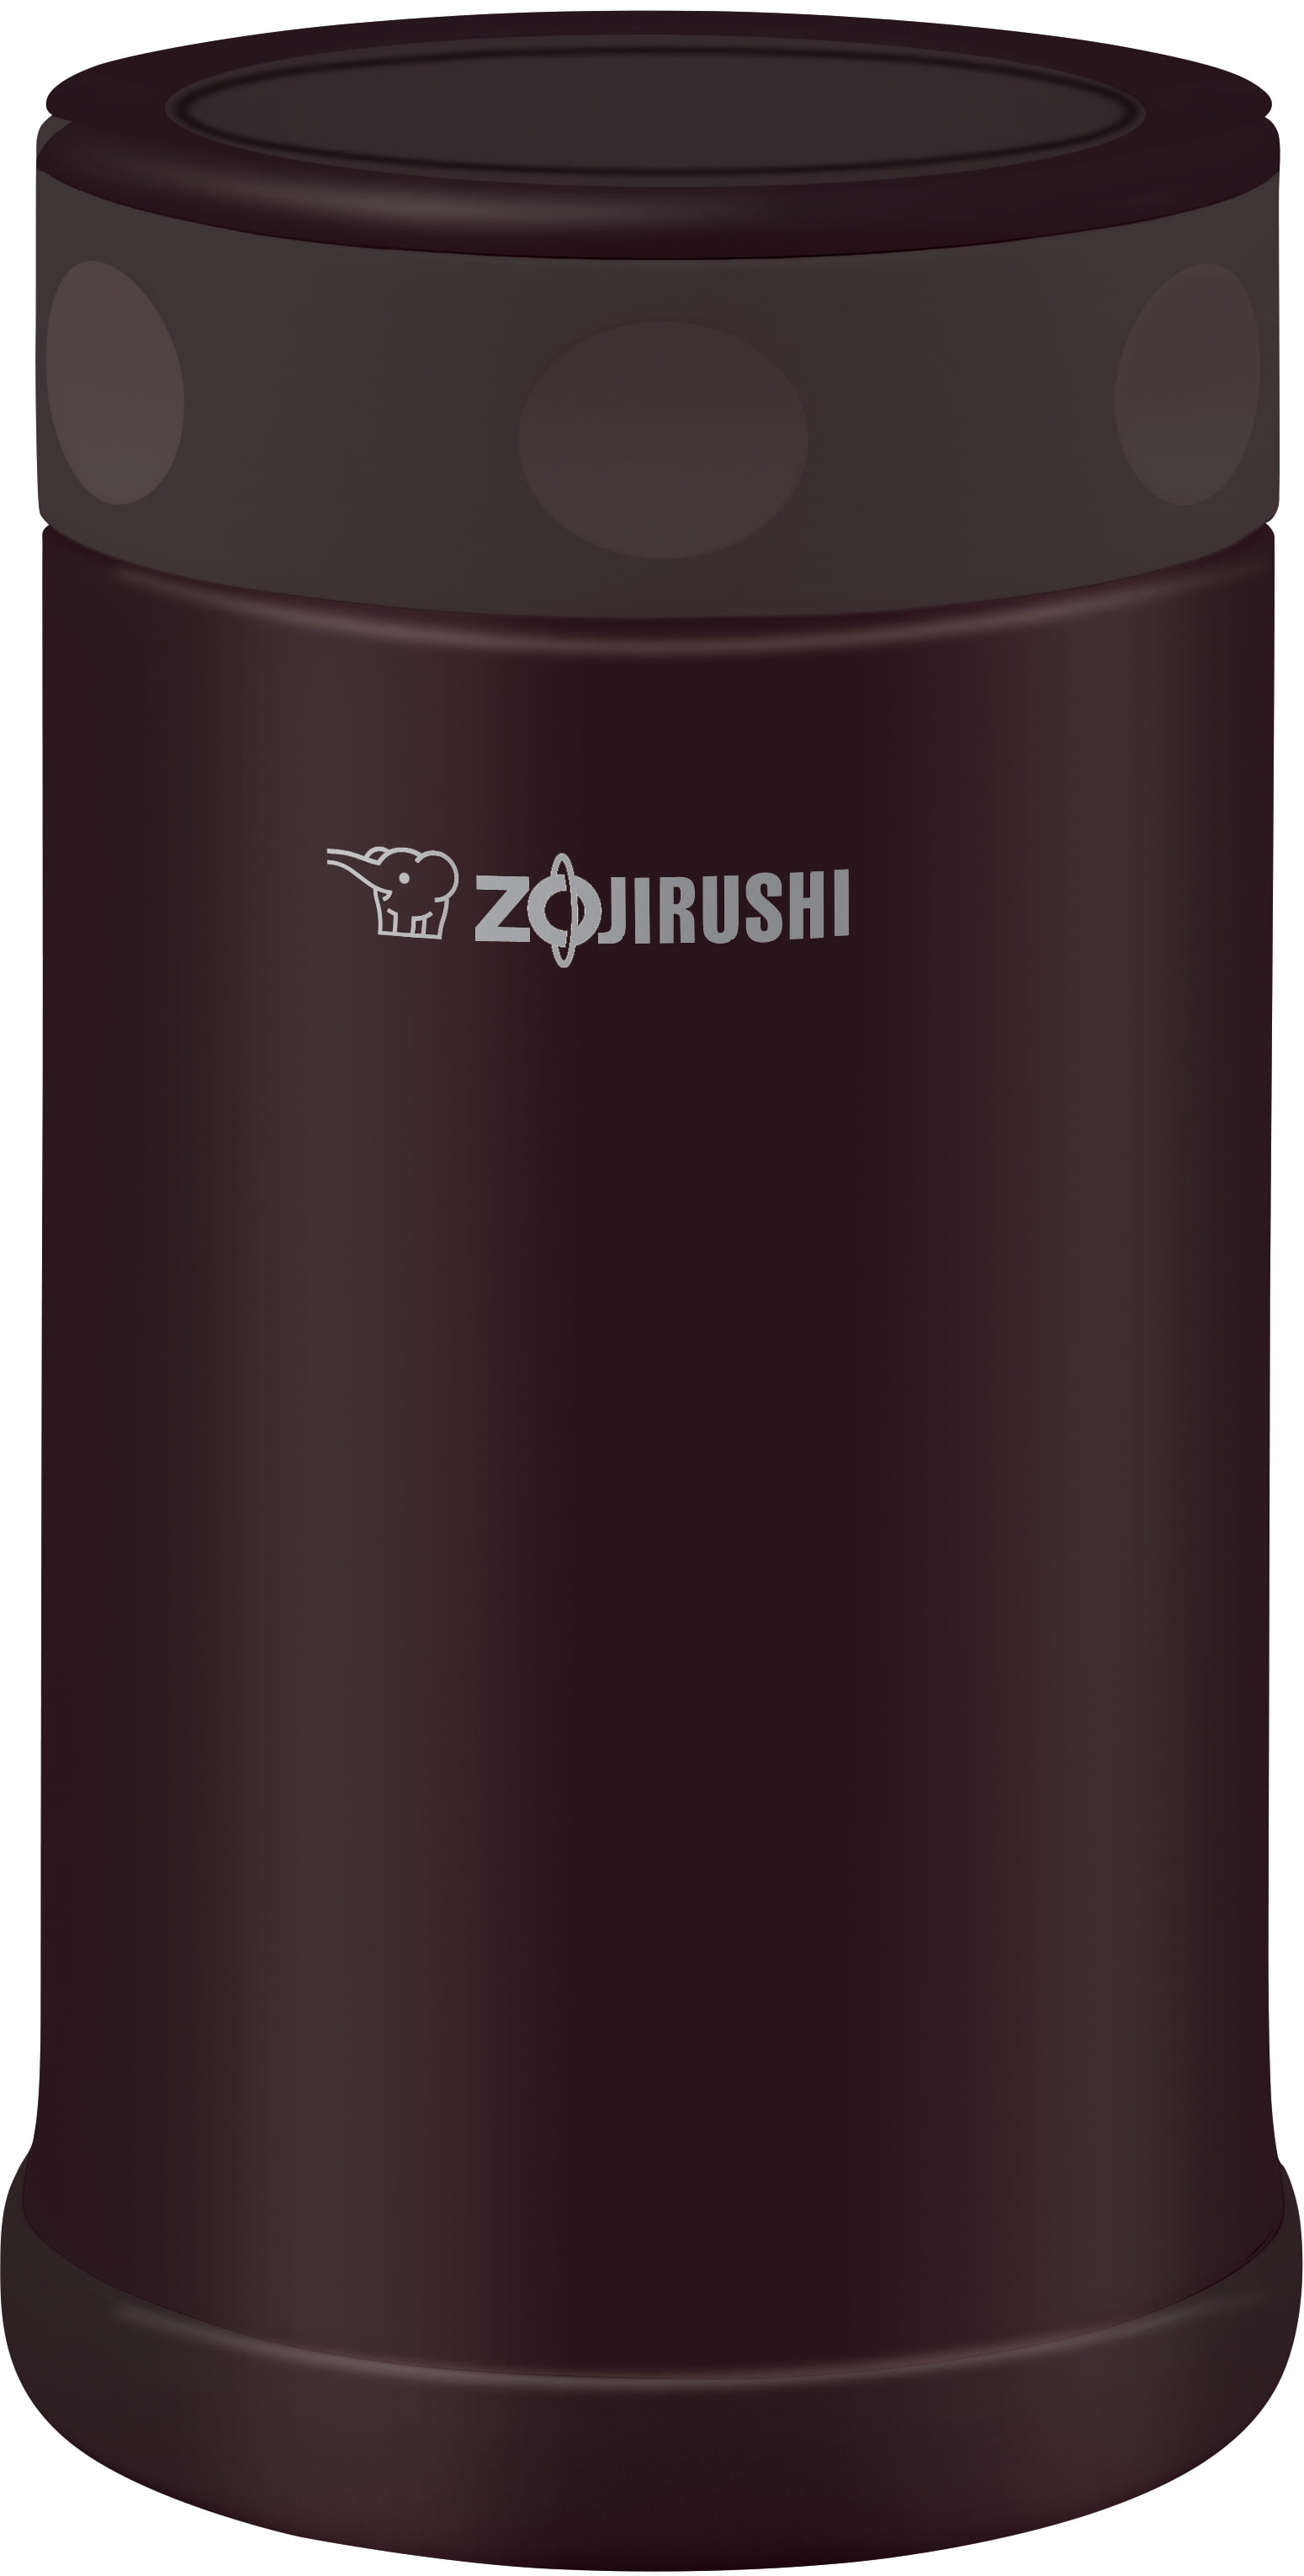 Get Zojirushi Stainless Steel Food Jar 25oz, Cream Delivered